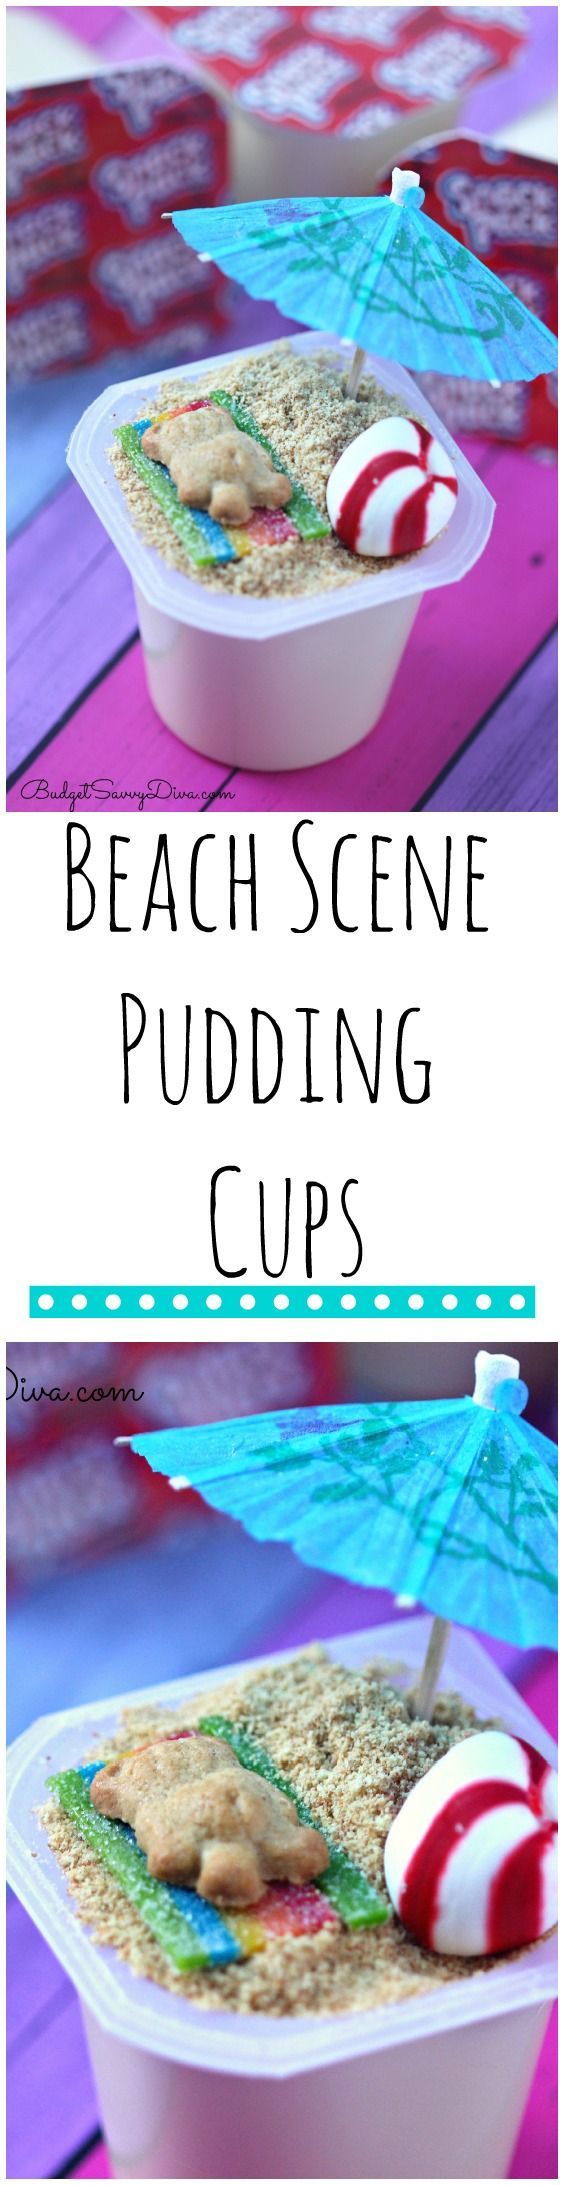 Beach Scene Pudding Cups Recipe